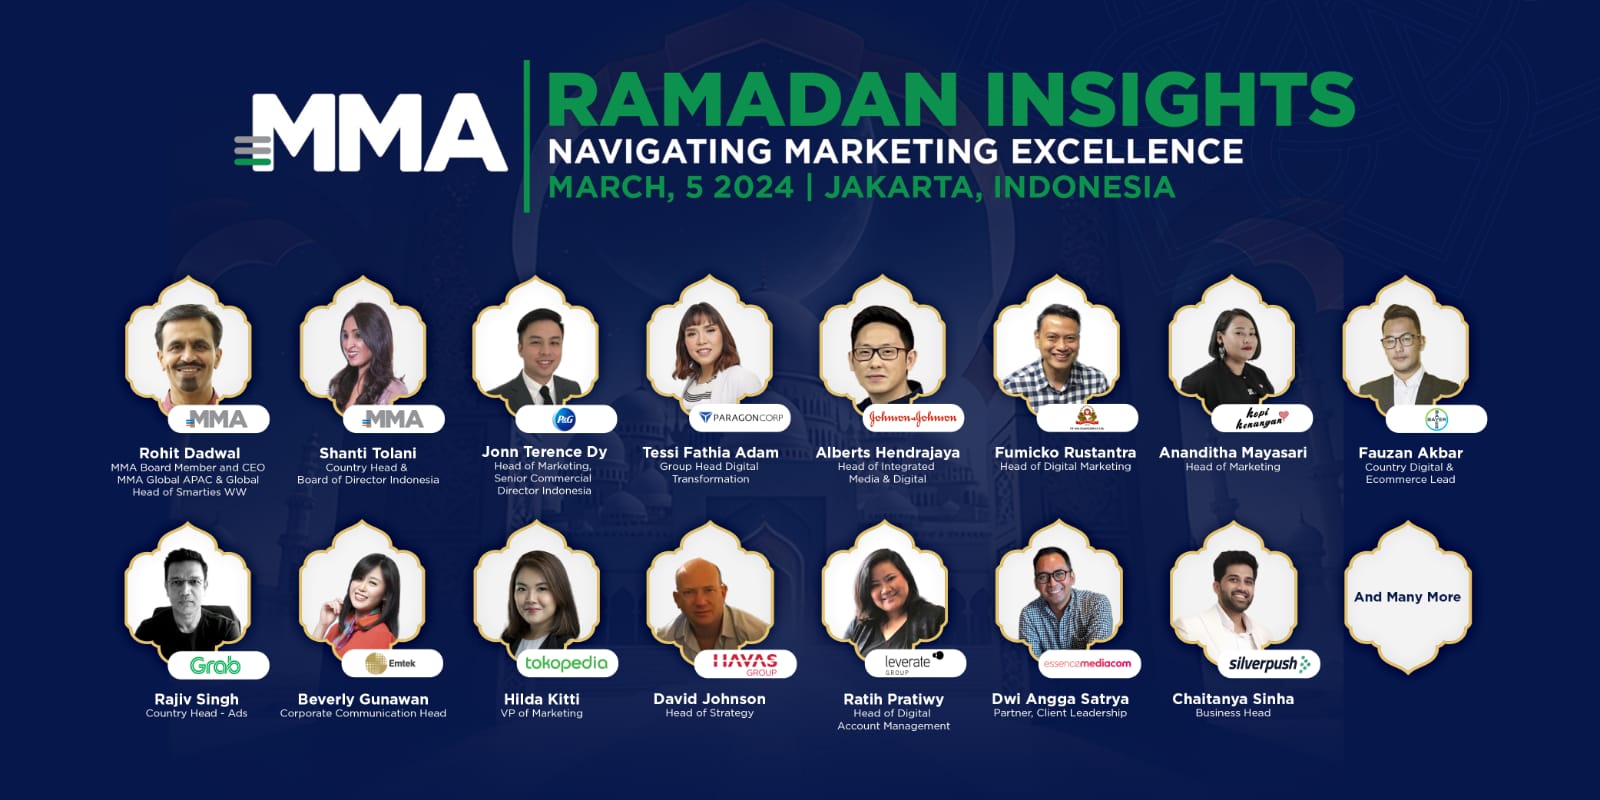 MMA Global Indonesia's Ramadan Insights 2024